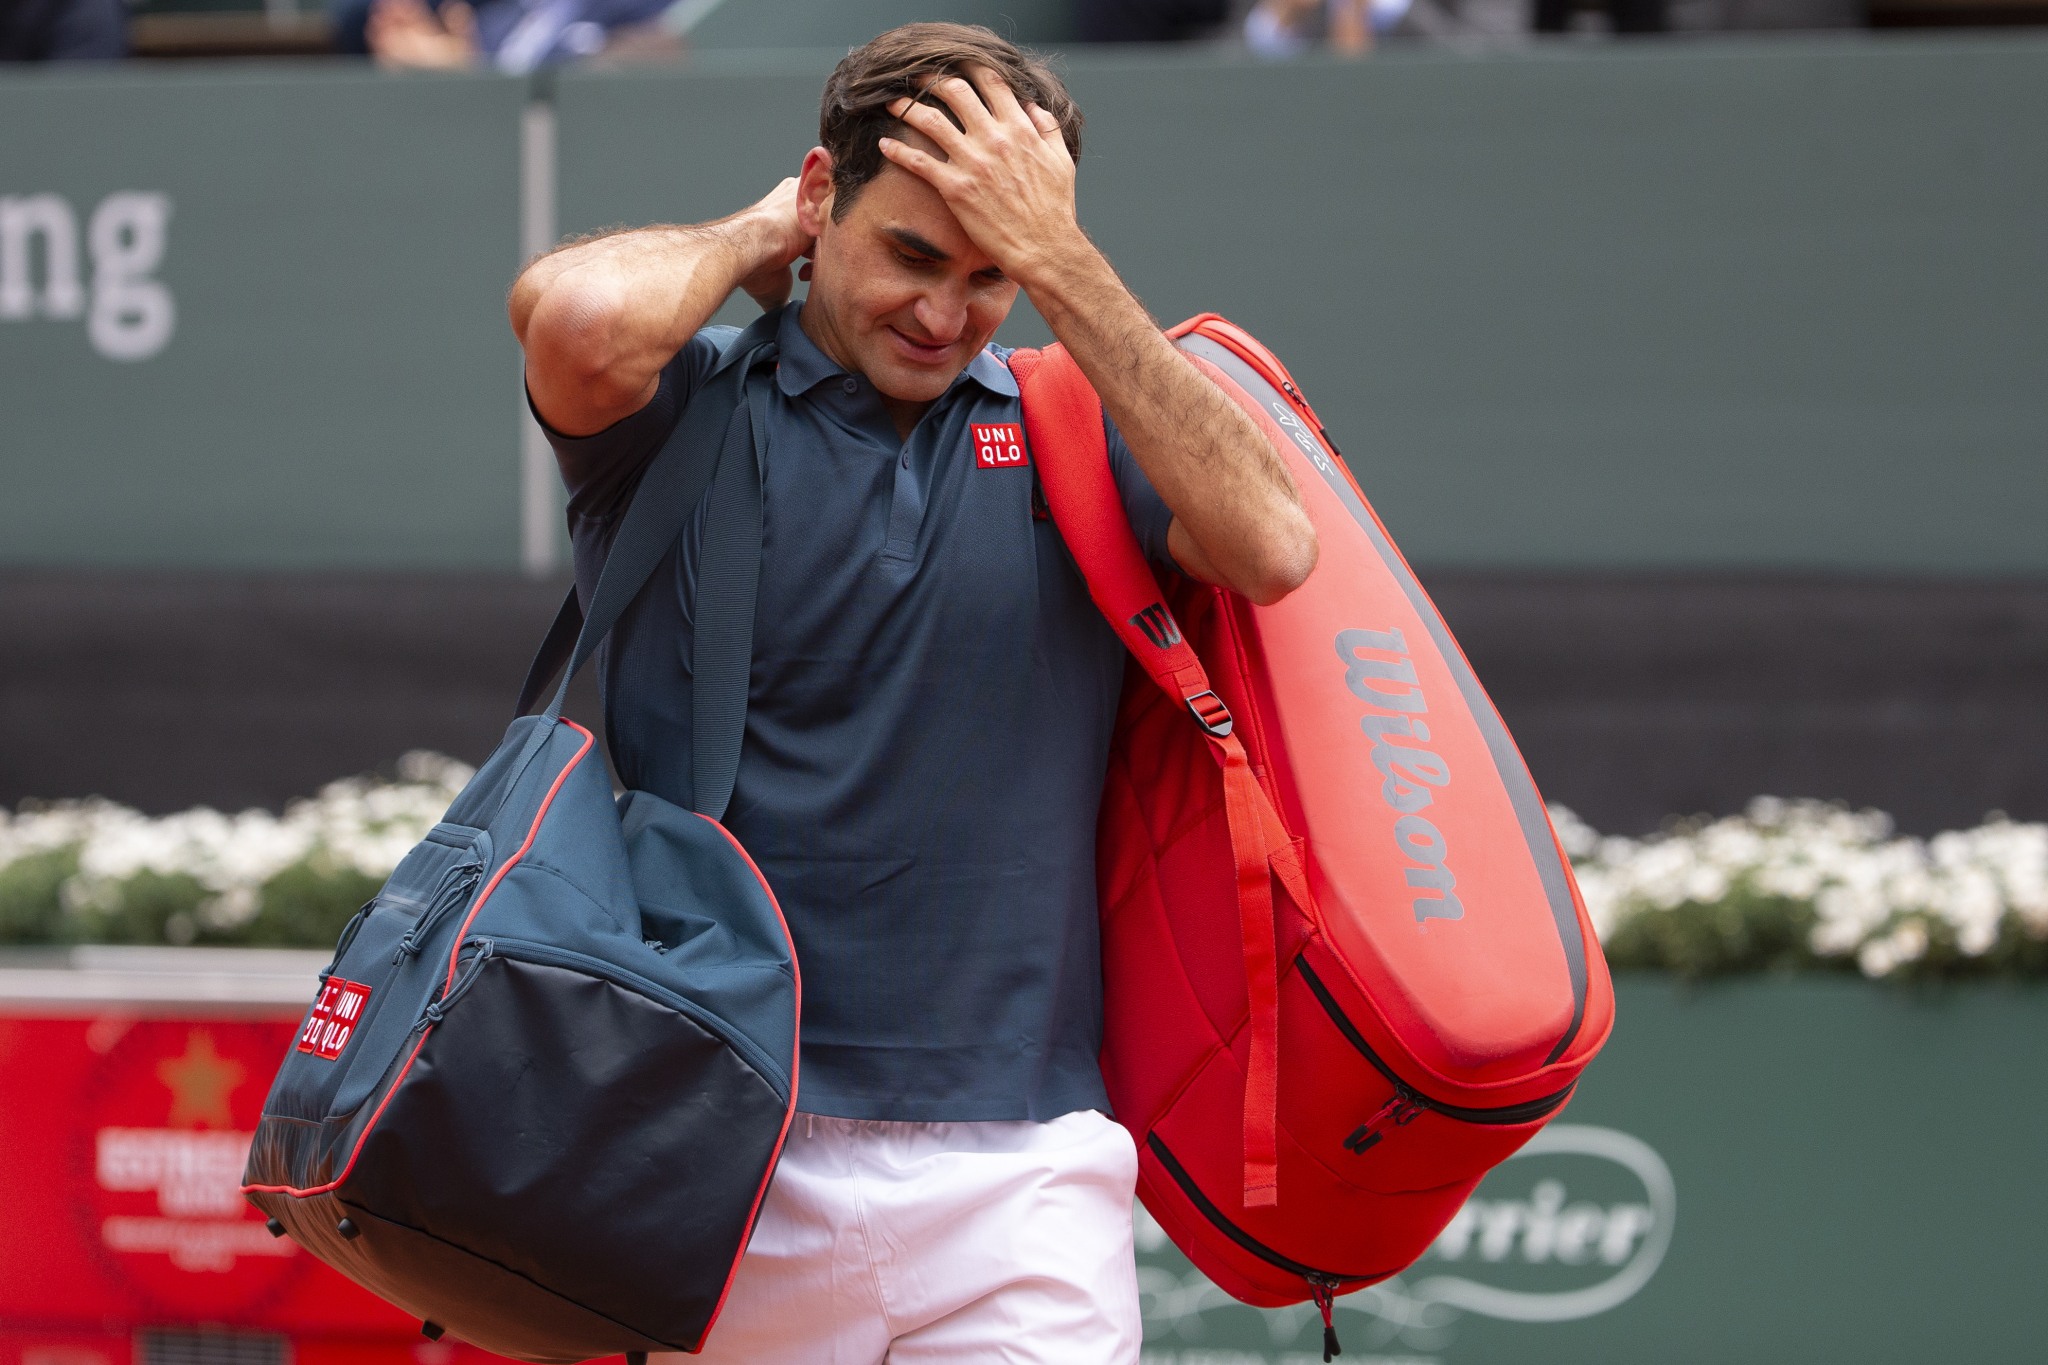 ŠVAJCARAC SMISLIO PAKLENI PLAN! Federer ne želi trofej na Rolan Garosu već da se osveti Đokoviću!